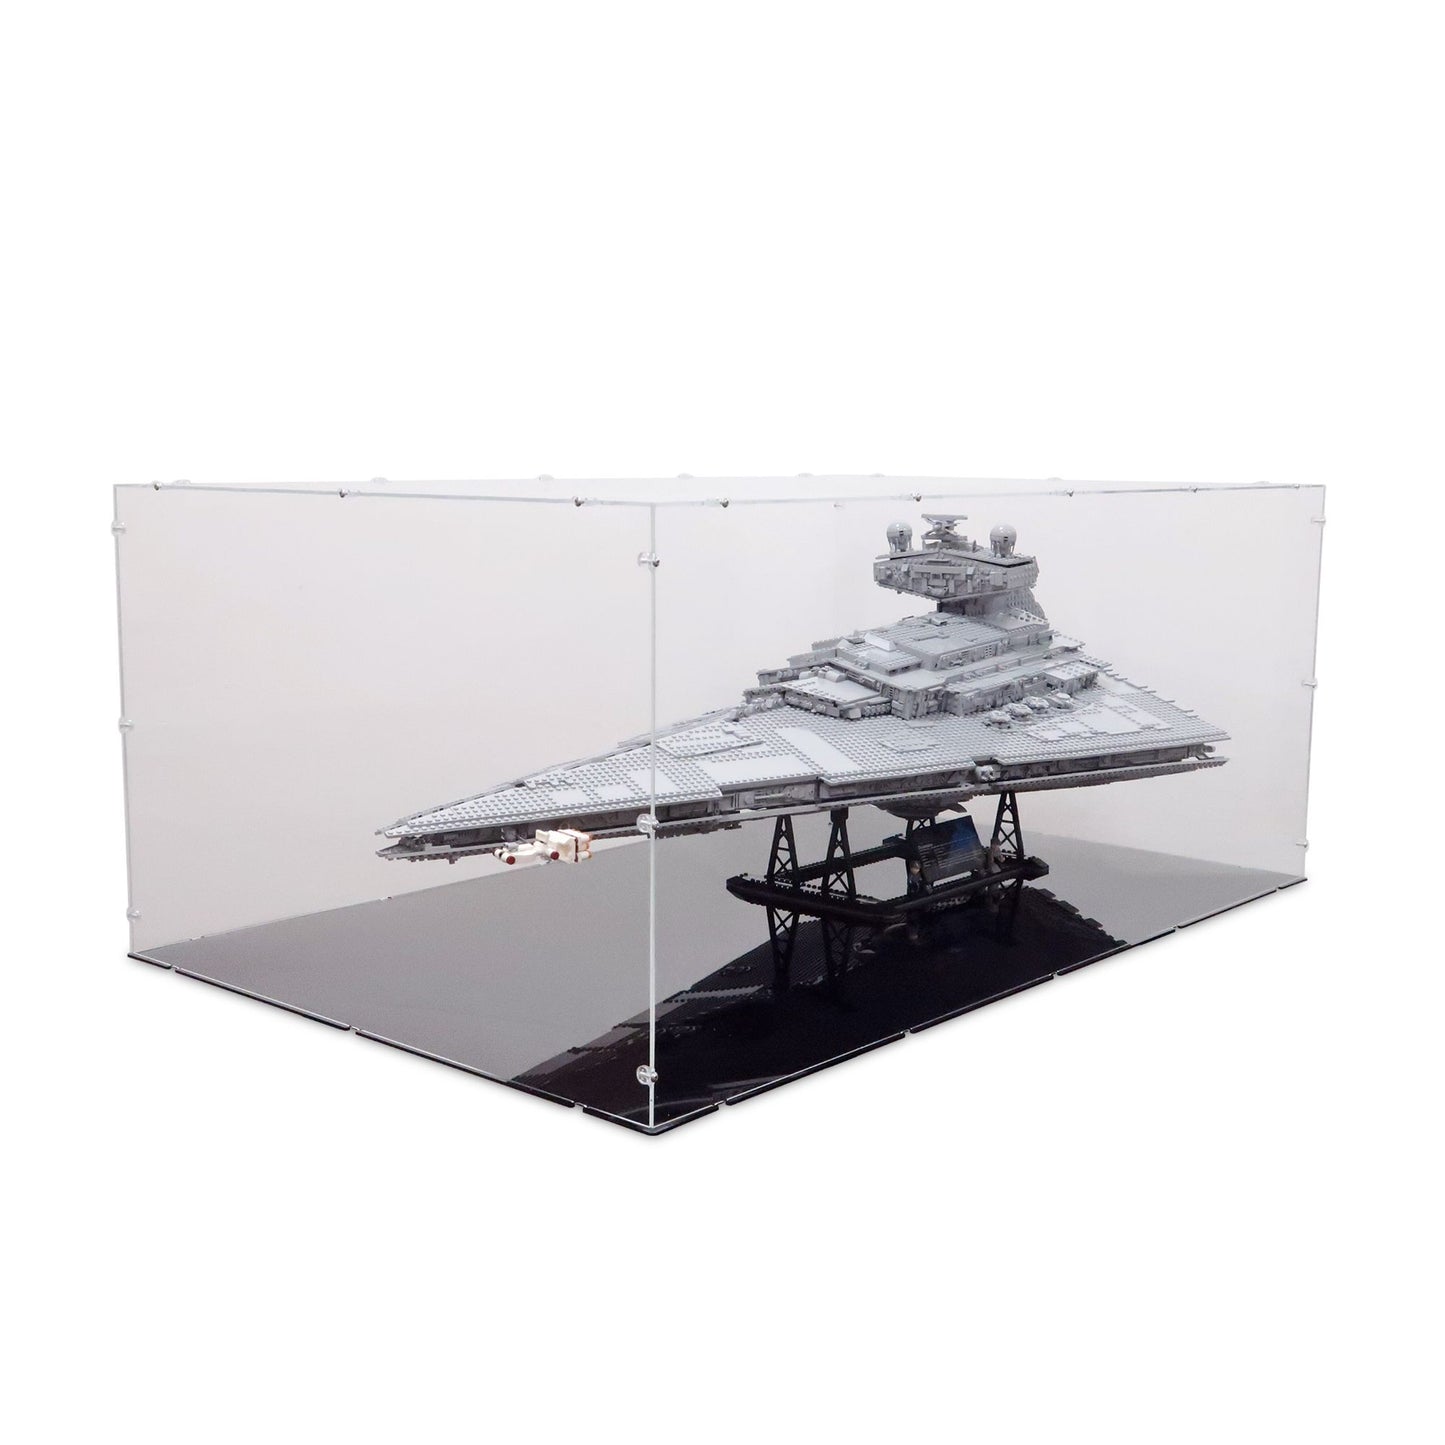 75252 UCS Imperial Star Destroyer Display Case